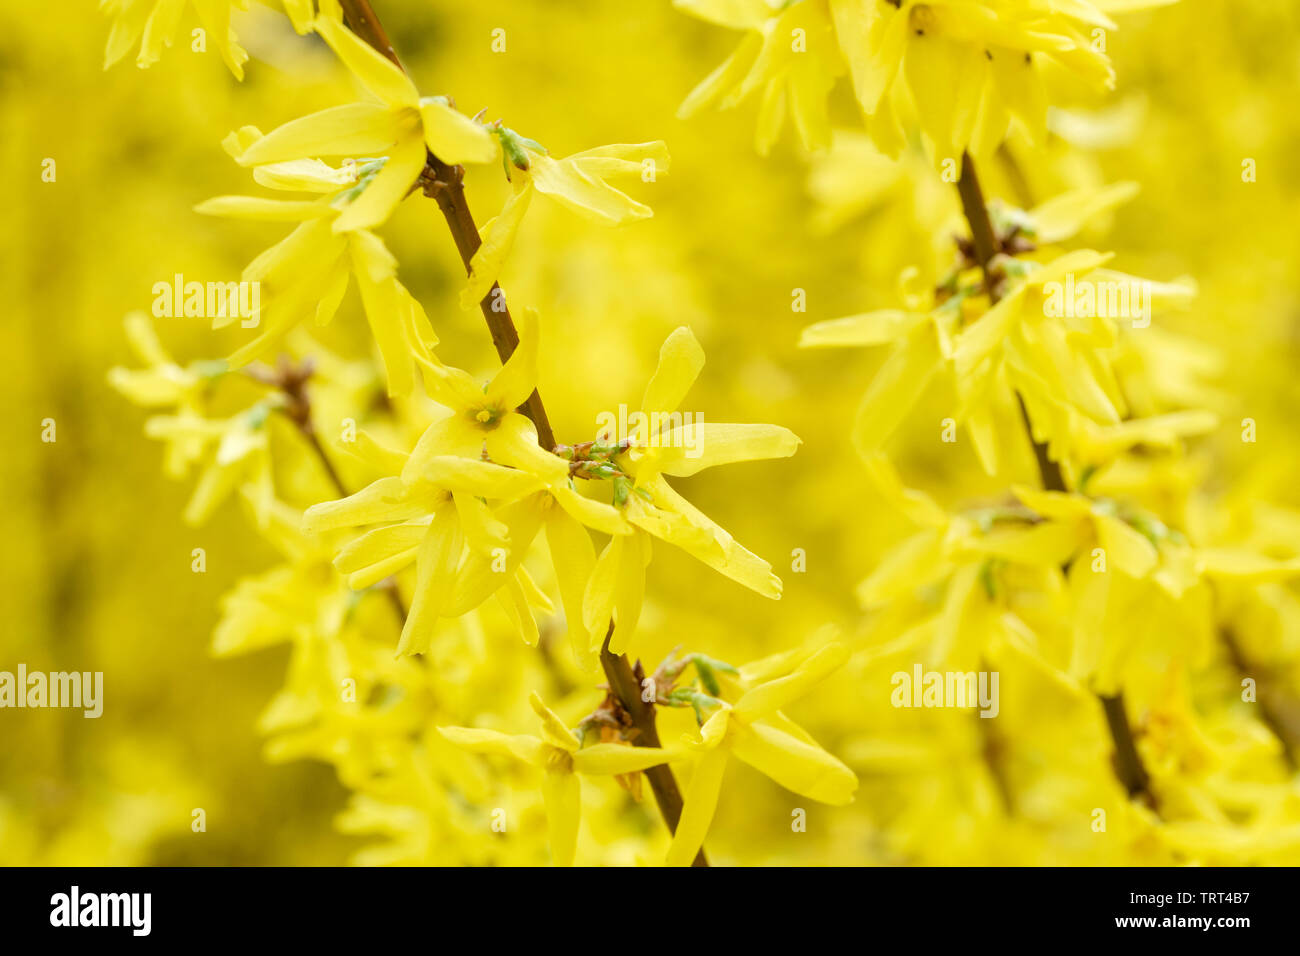 Close-up of yellow tubular flowers of Forsythia × intermedia 'Spring Glory' forsythia 'Spring Glory' Stock Photo